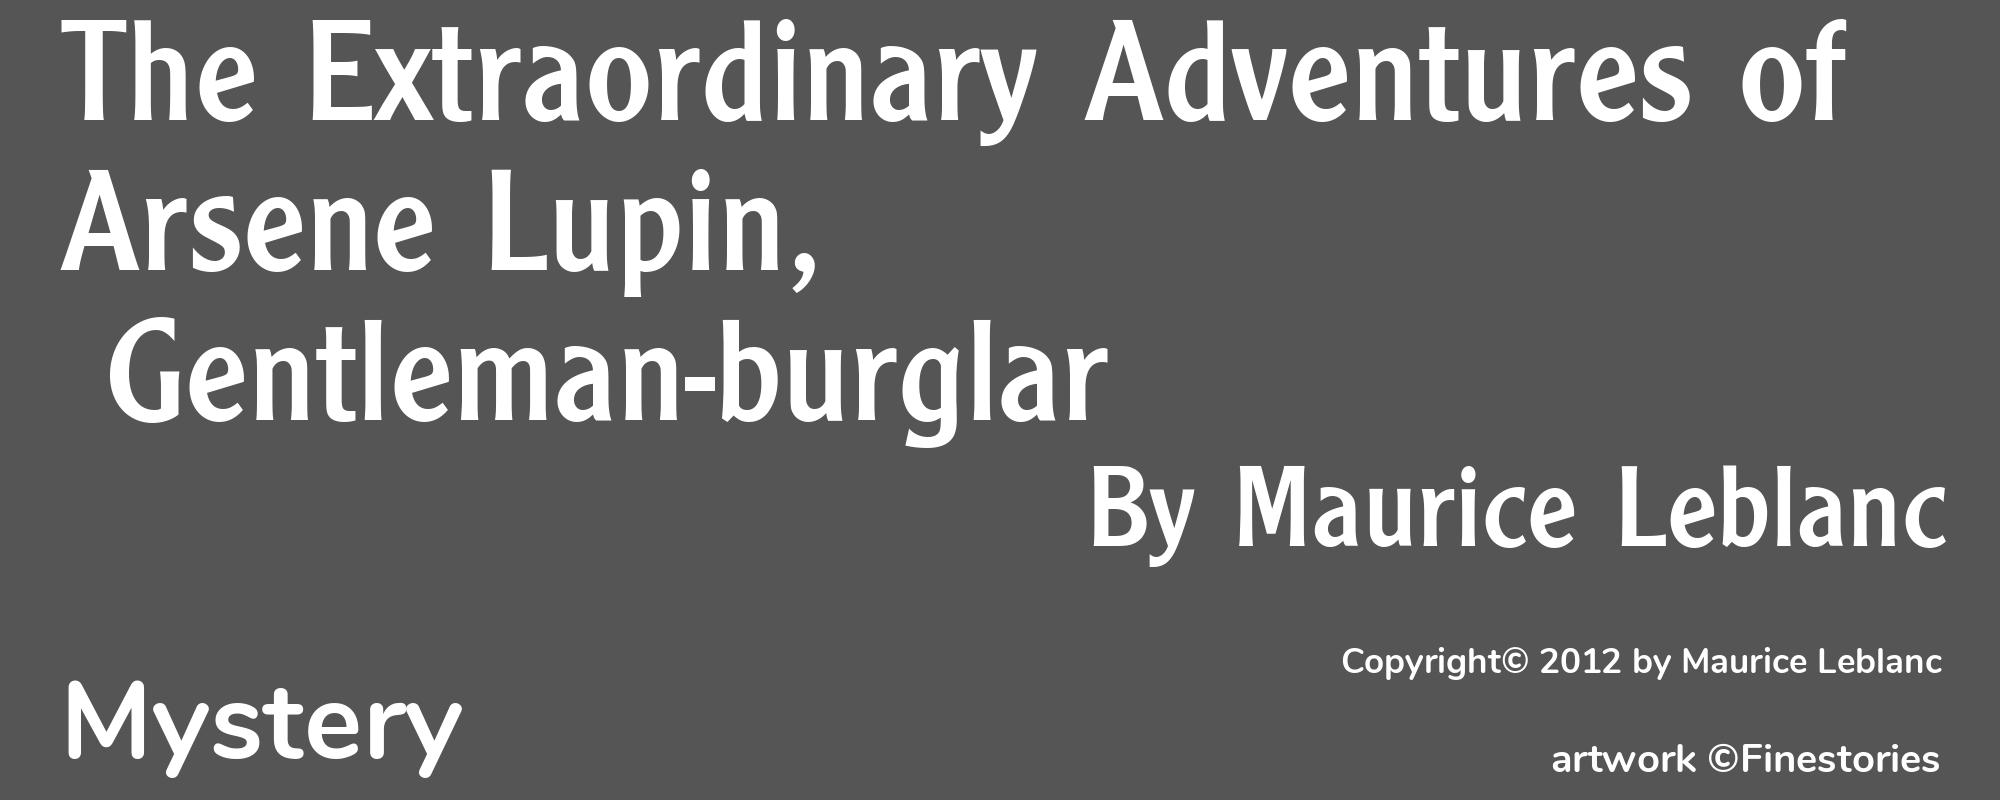 The Extraordinary Adventures of Arsene Lupin, Gentleman-burglar - Cover